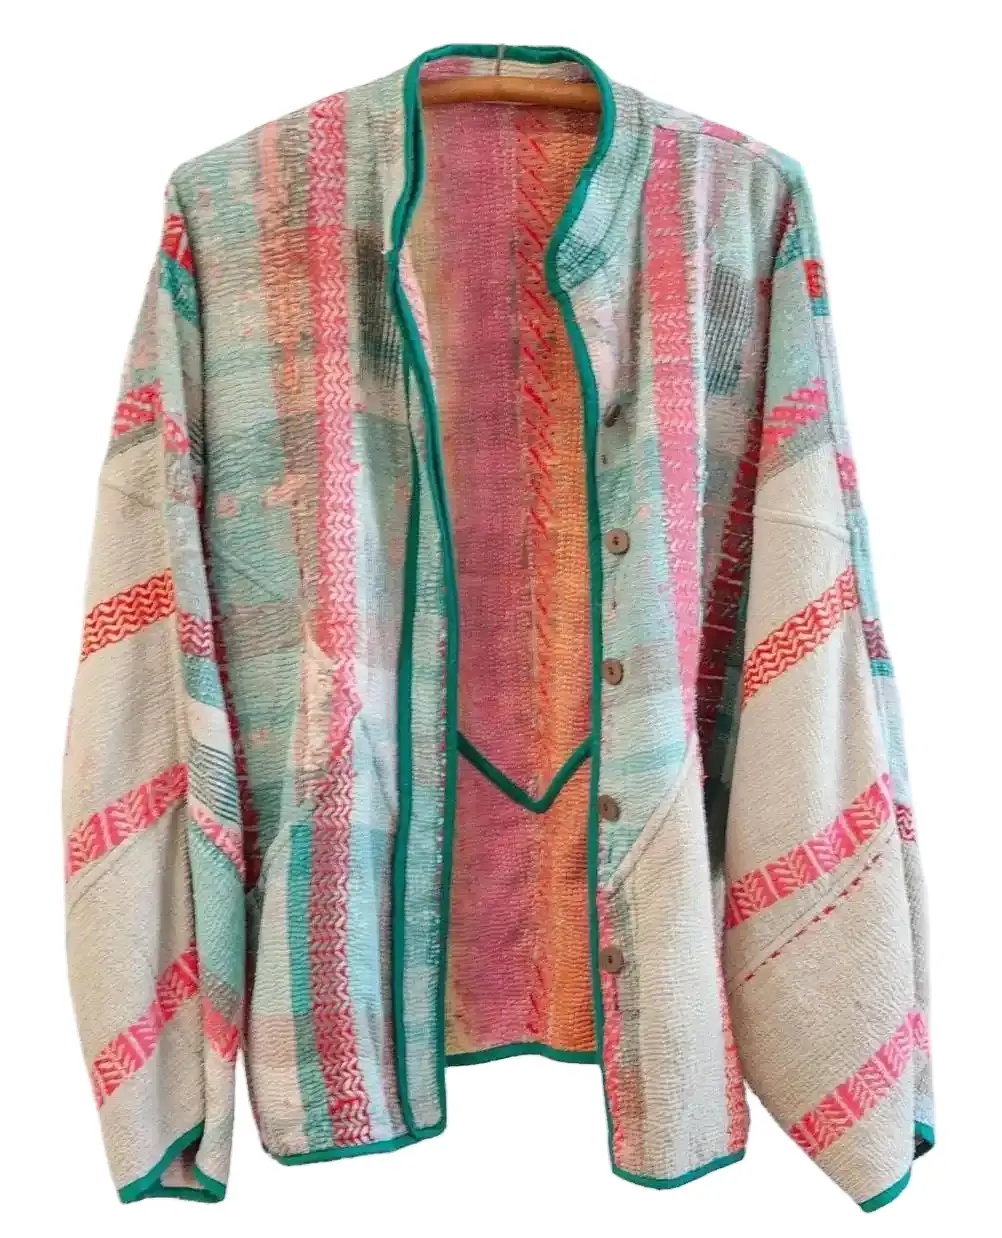 Best Quality Beautiful Embroidery Vintage Kantha Jacket Latest Women Short Jacket Collection Color Designer Clothing